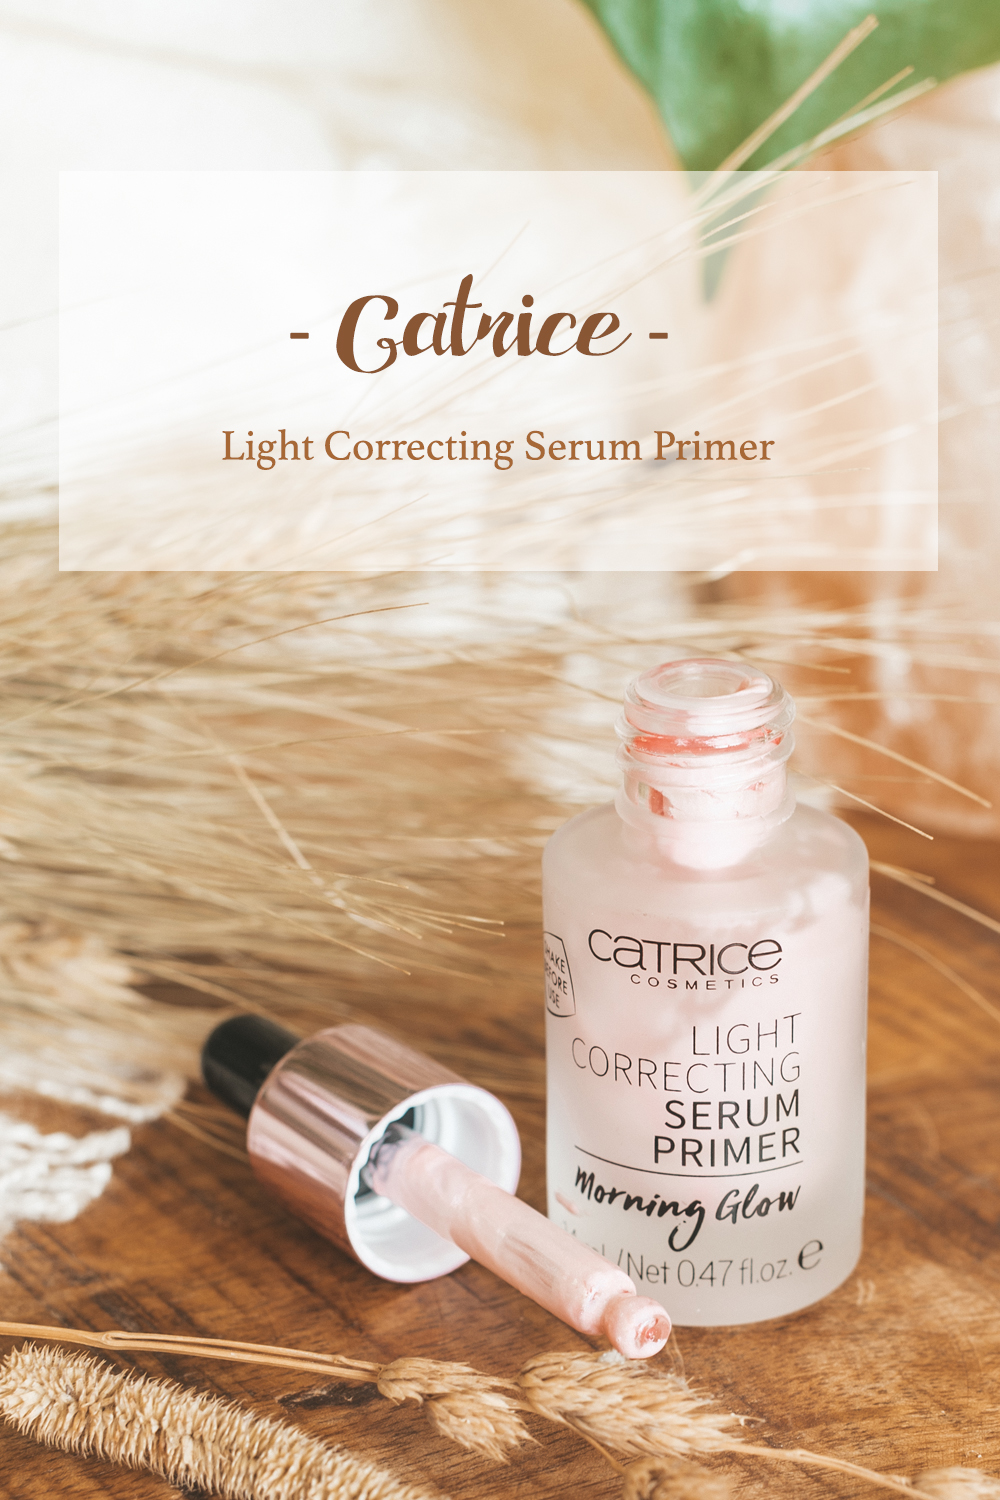 Catrice Light correcting serum primer morning glow